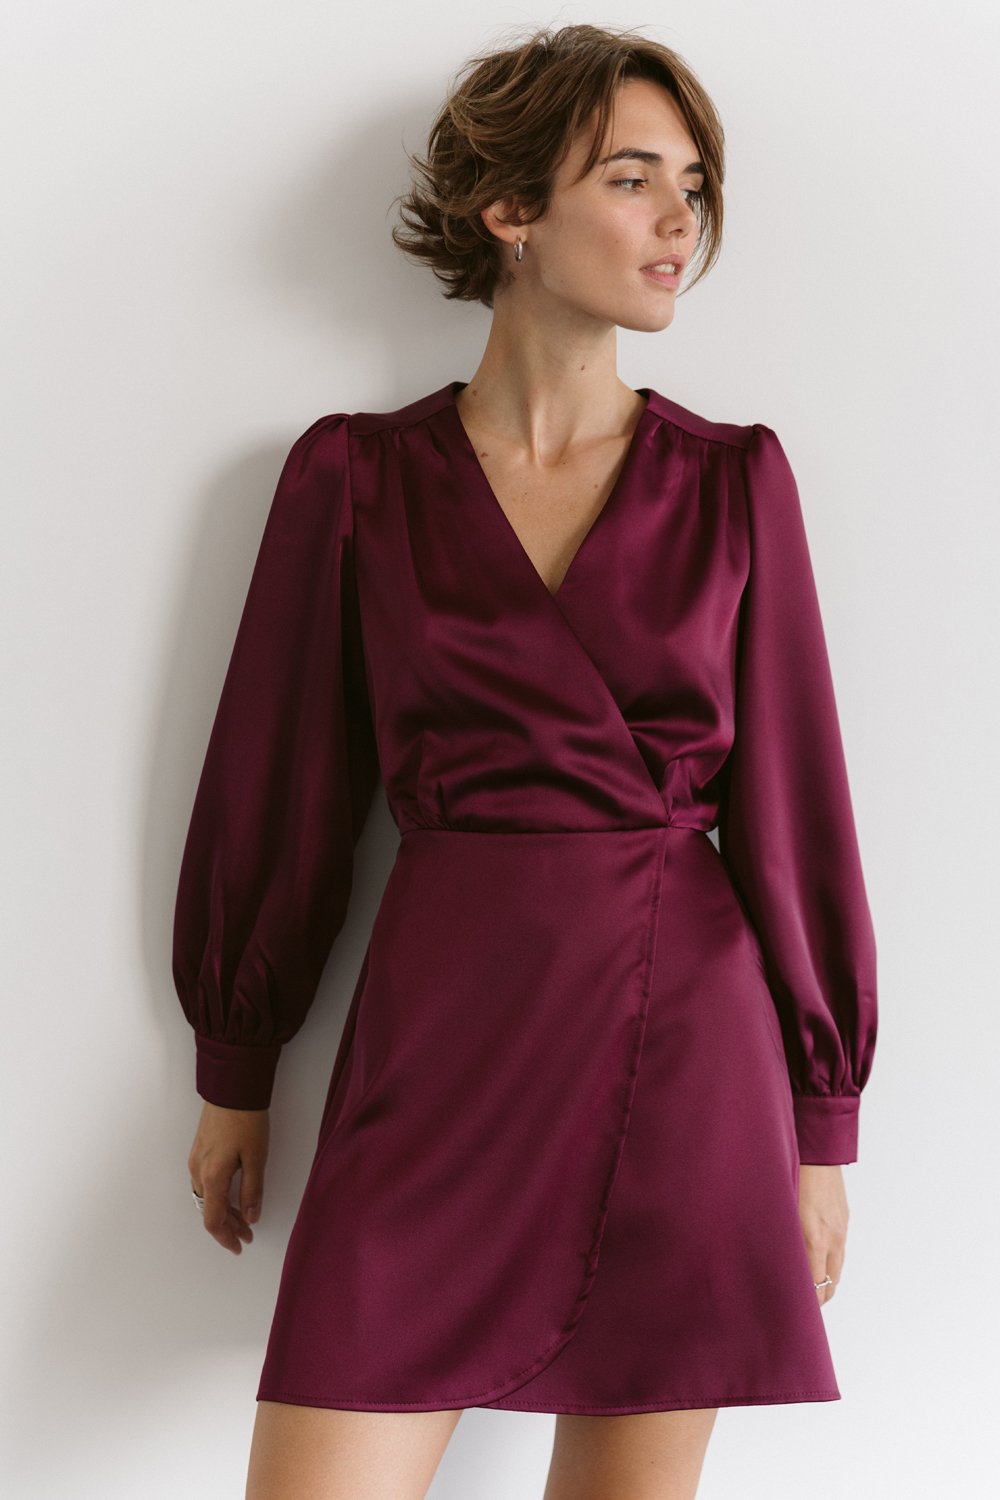 Elegant dress with an elasticated waist in burgundy